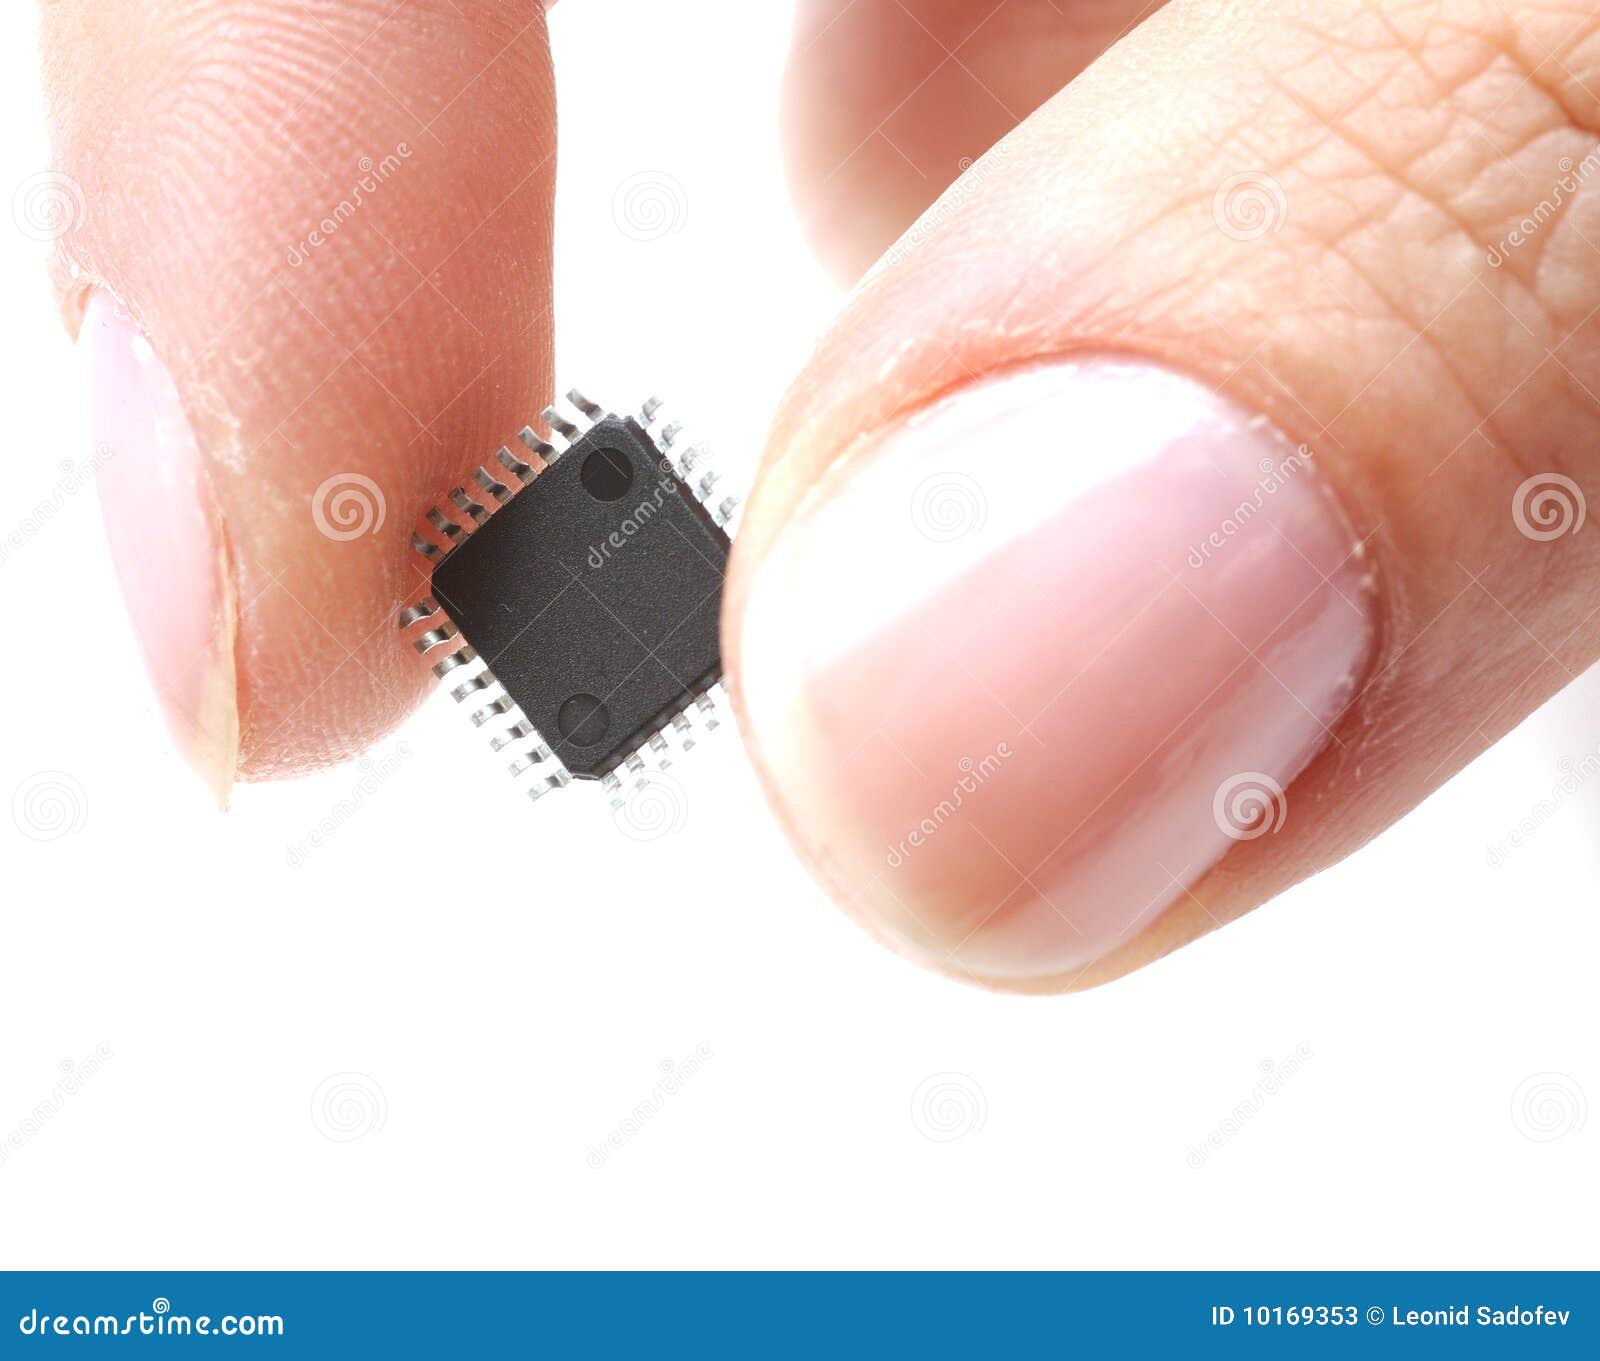 microprocessor on girls fingertip